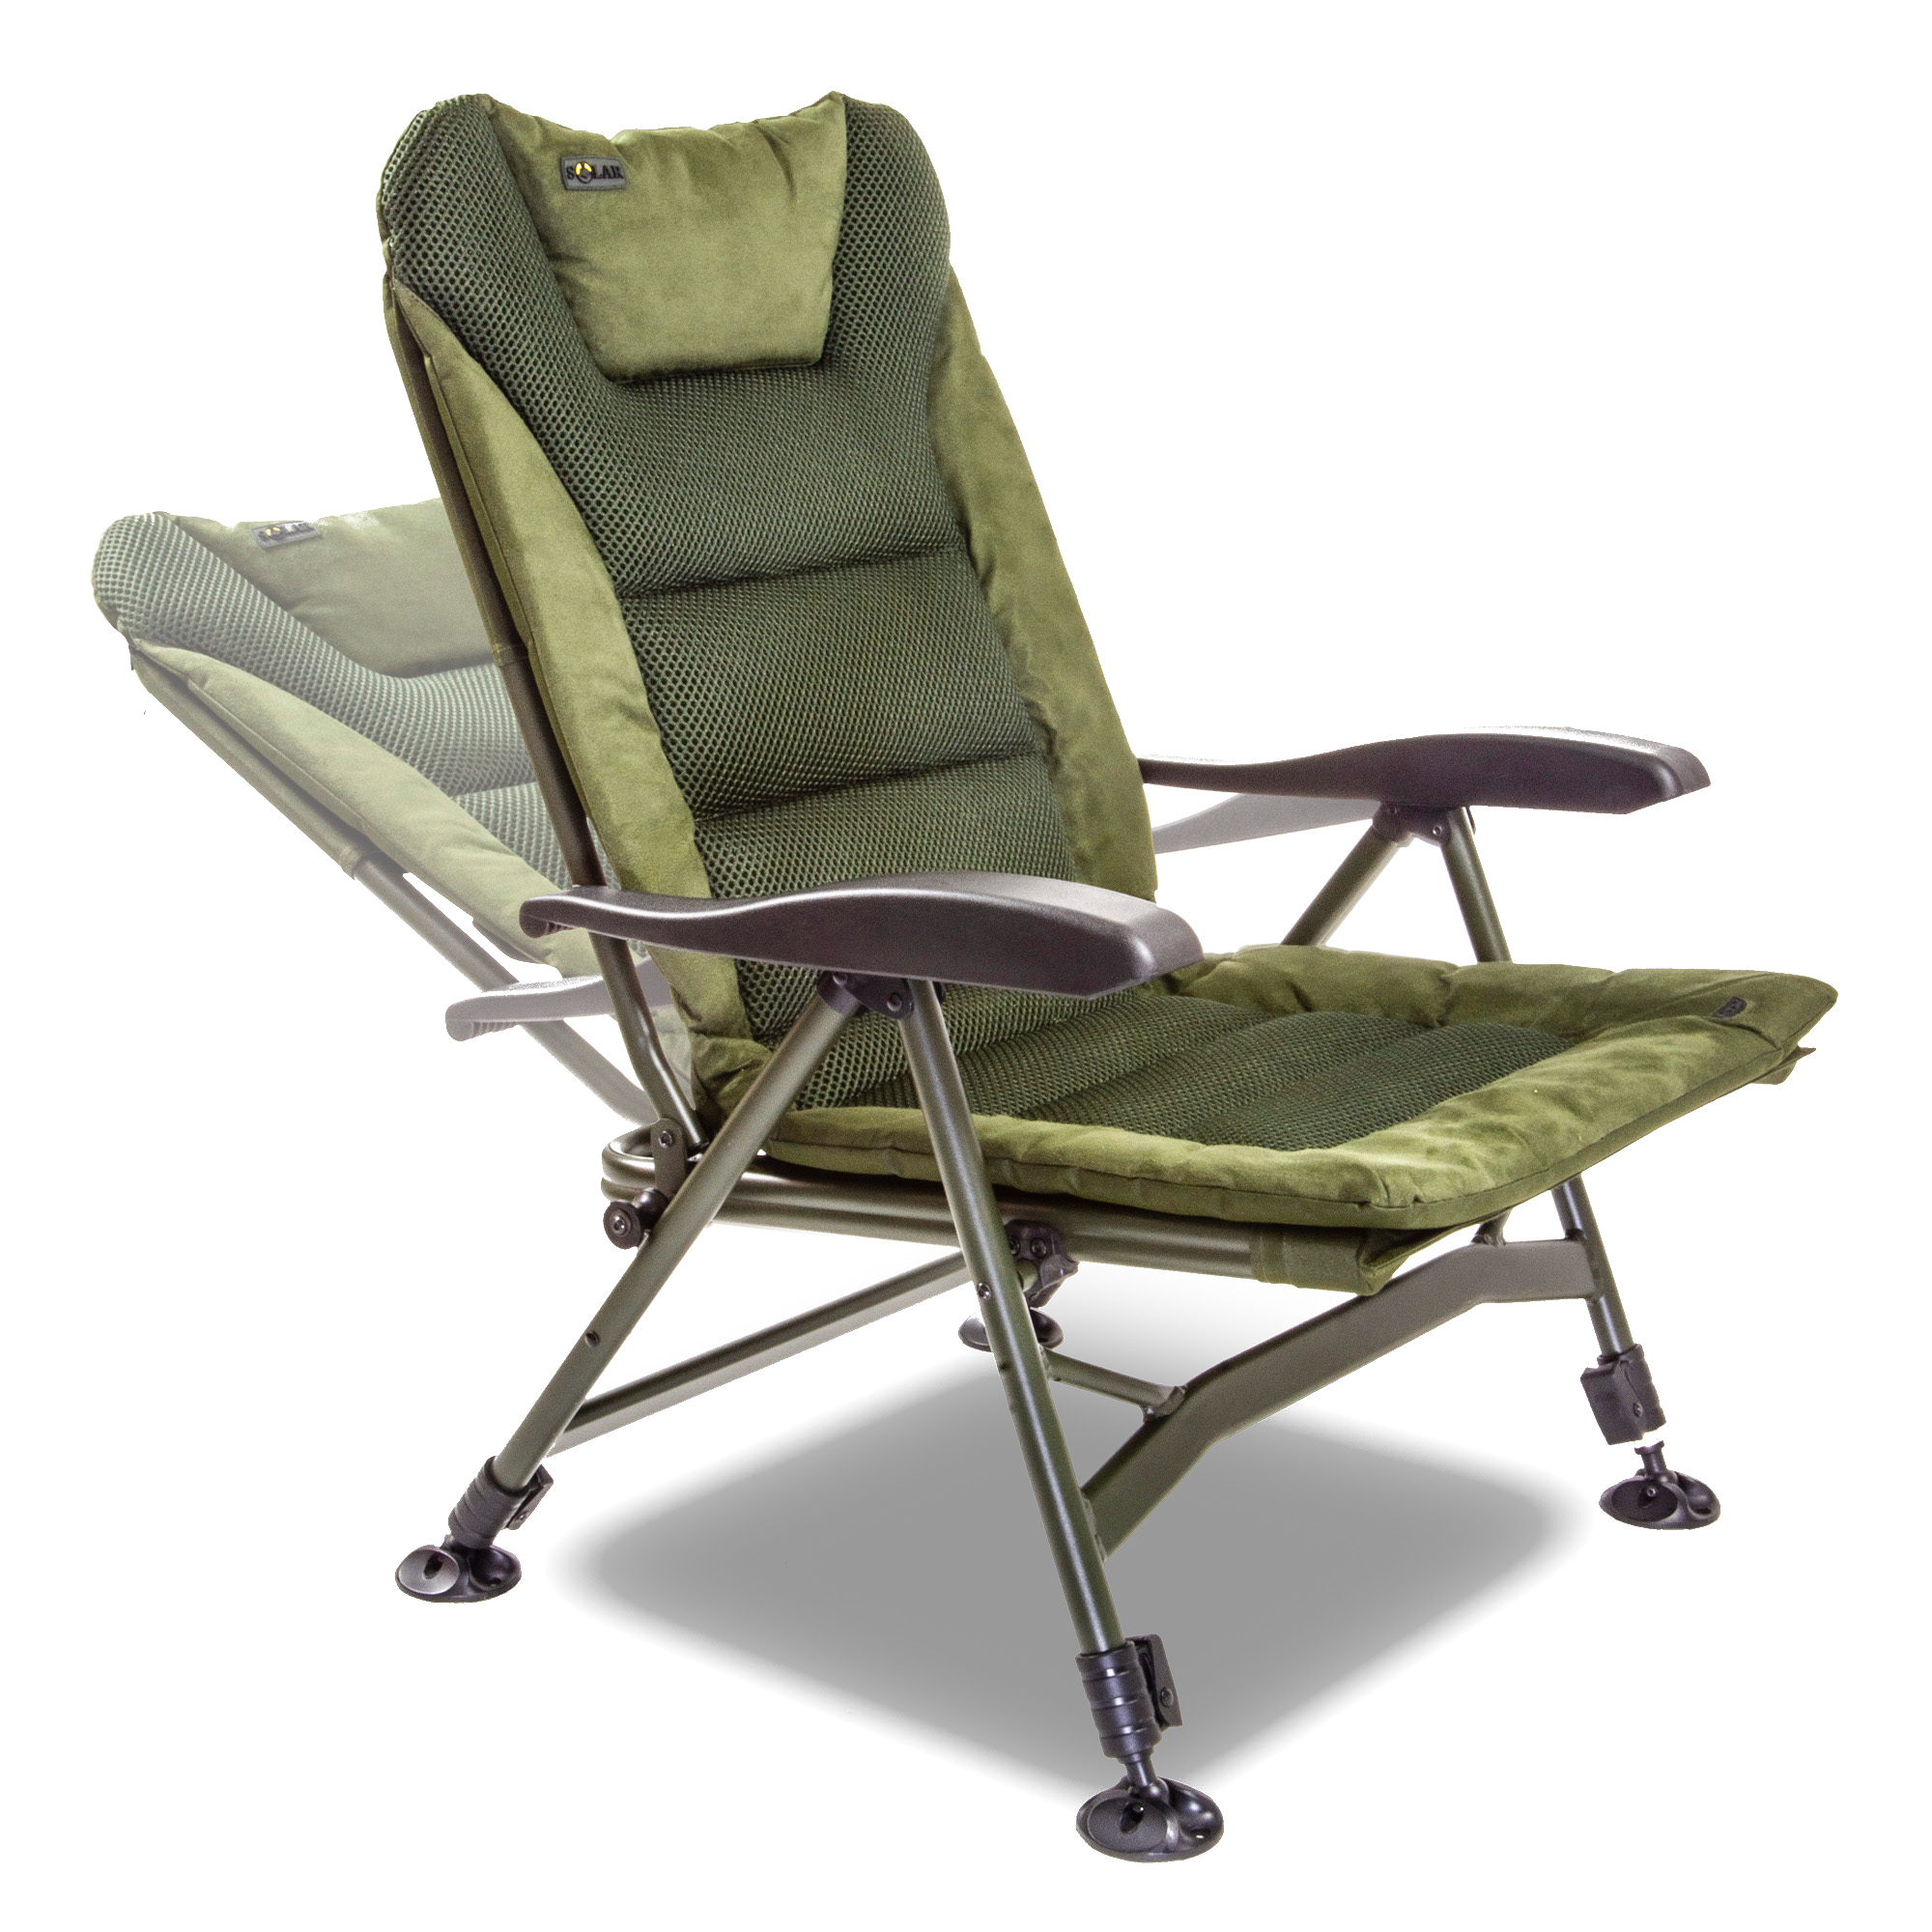 Solar SP Recliner Chair MKII Carp Chair - Low